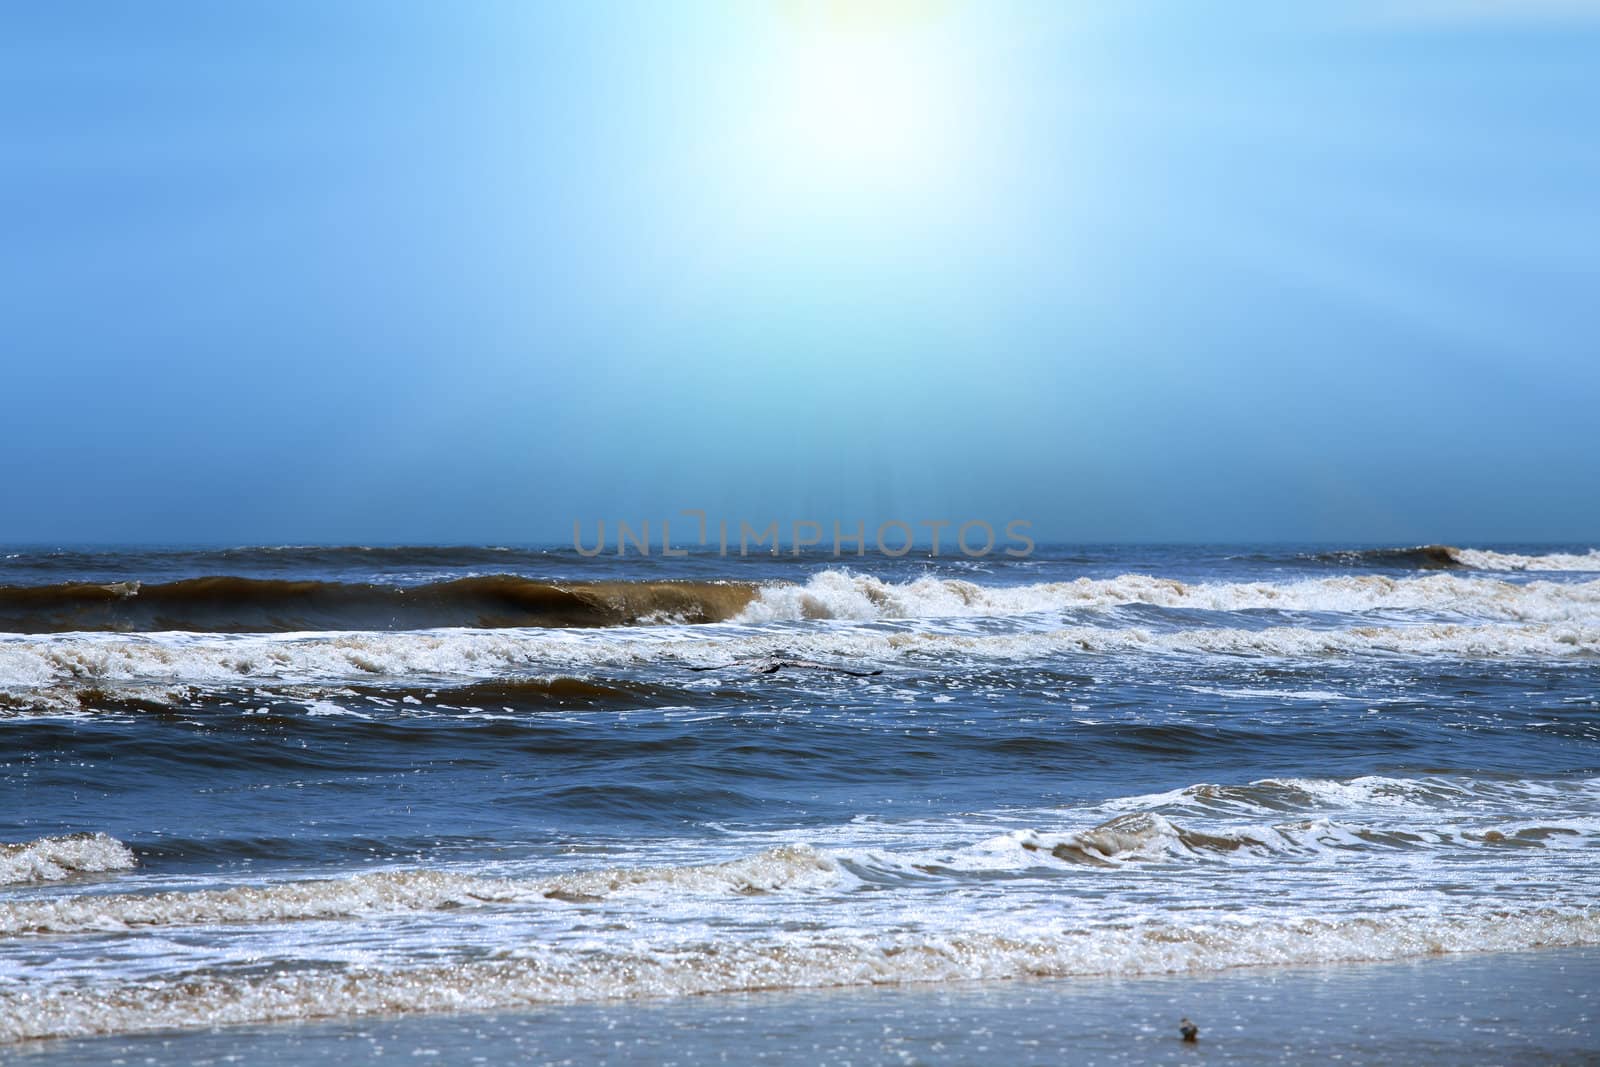 Sun shining over beautiful blue ocean shore